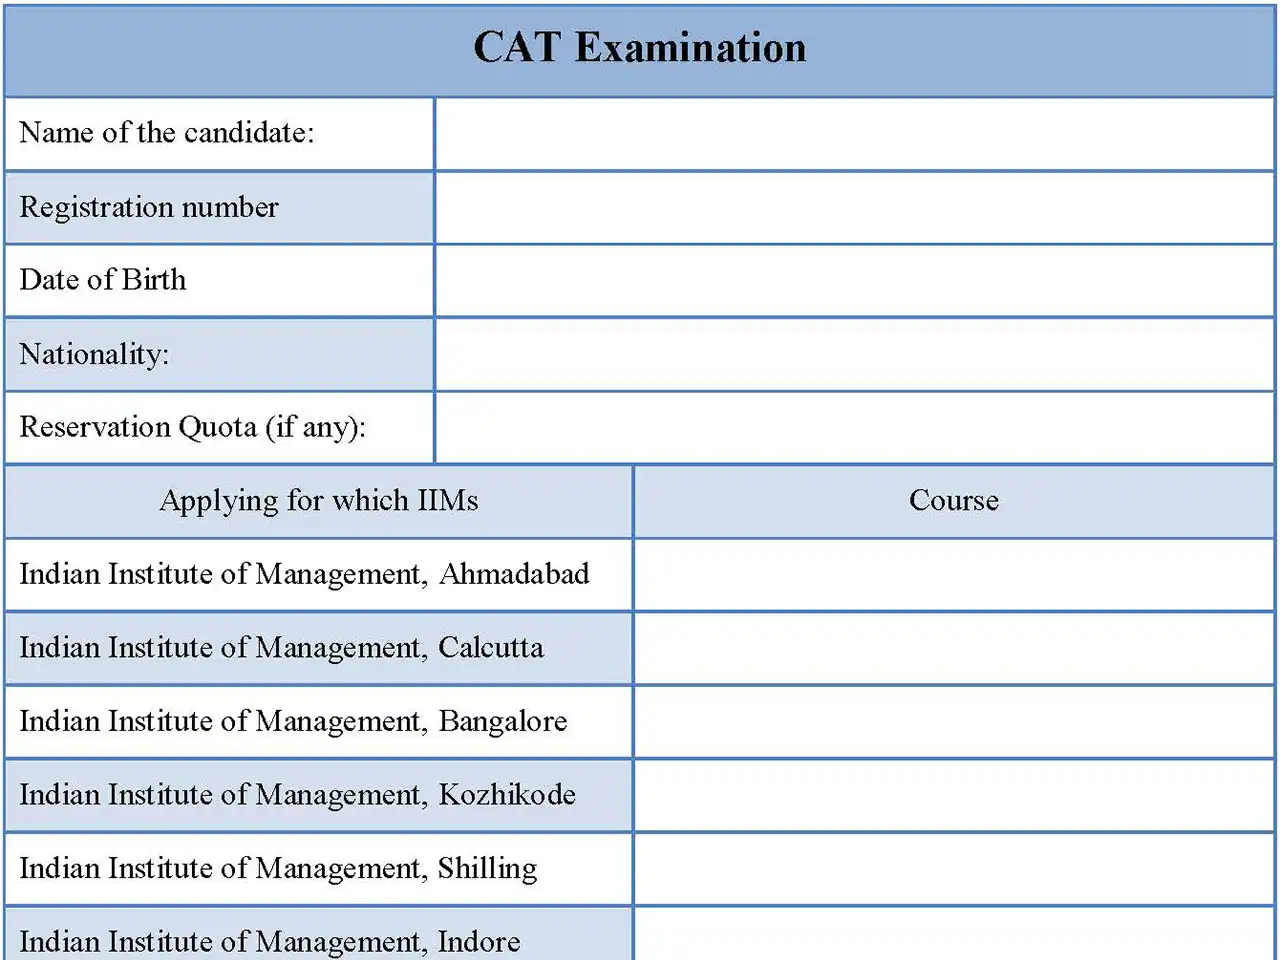 CAT examination Form